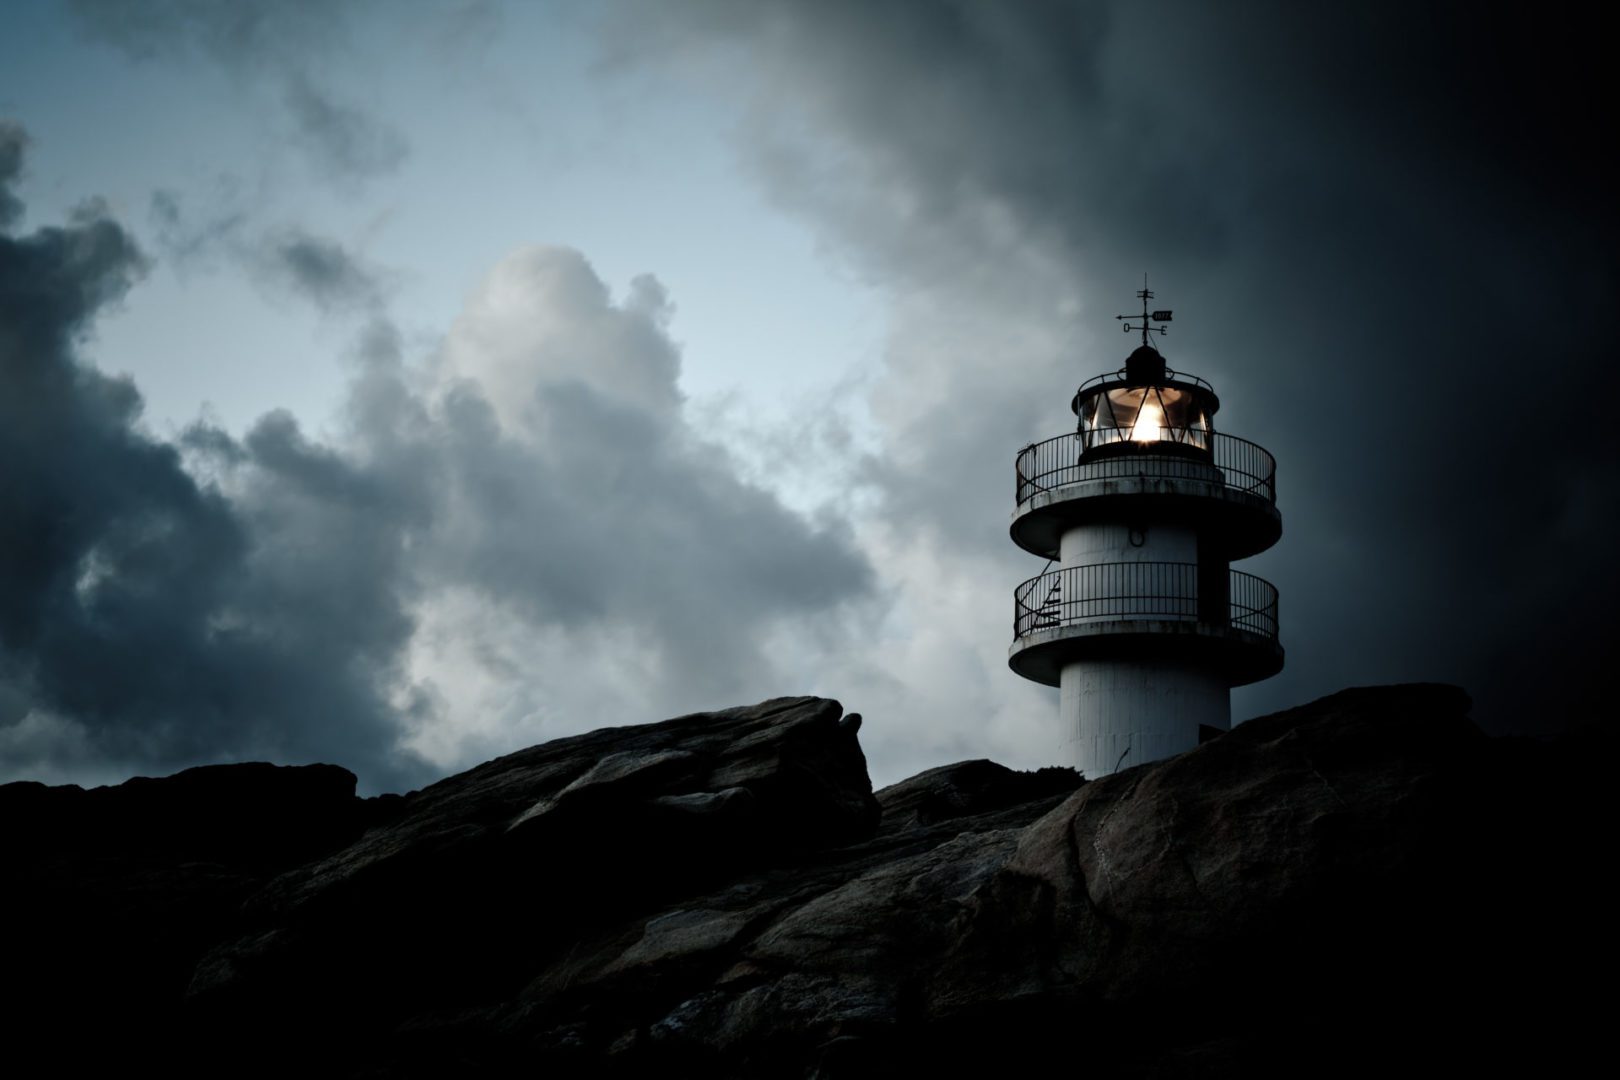 Working Lighthouse at Bad Weather. Horizontal shot